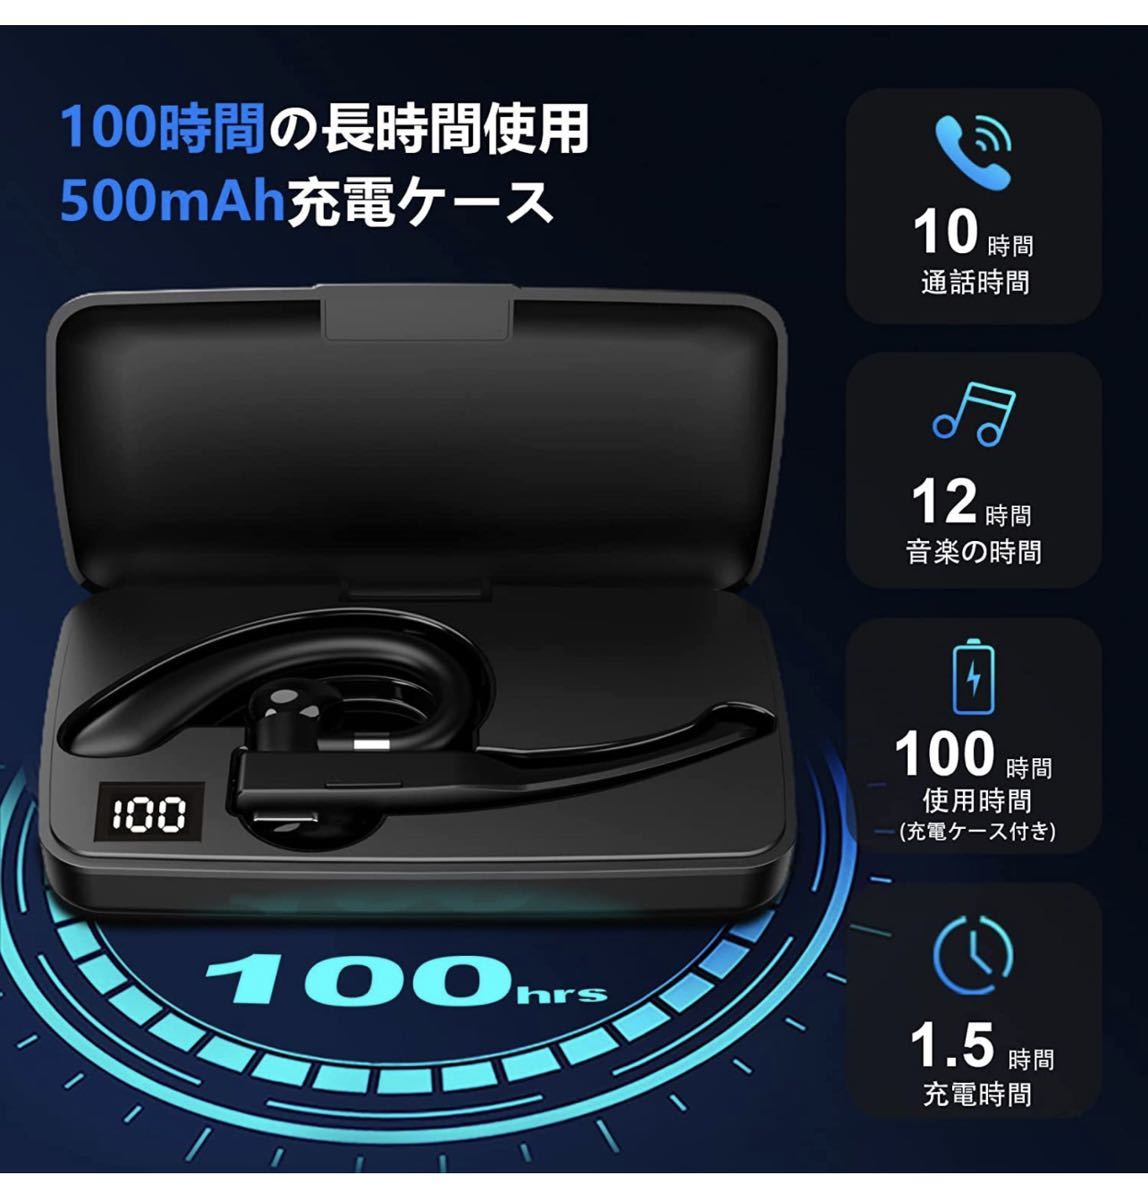 Bluetoothヘッドセット V5.1 片耳イヤホン 耳掛け型 100時間連続使用 500mAh充電ケース付 LEDバッテリー残量ディスプレイ ハンズフリー_画像3